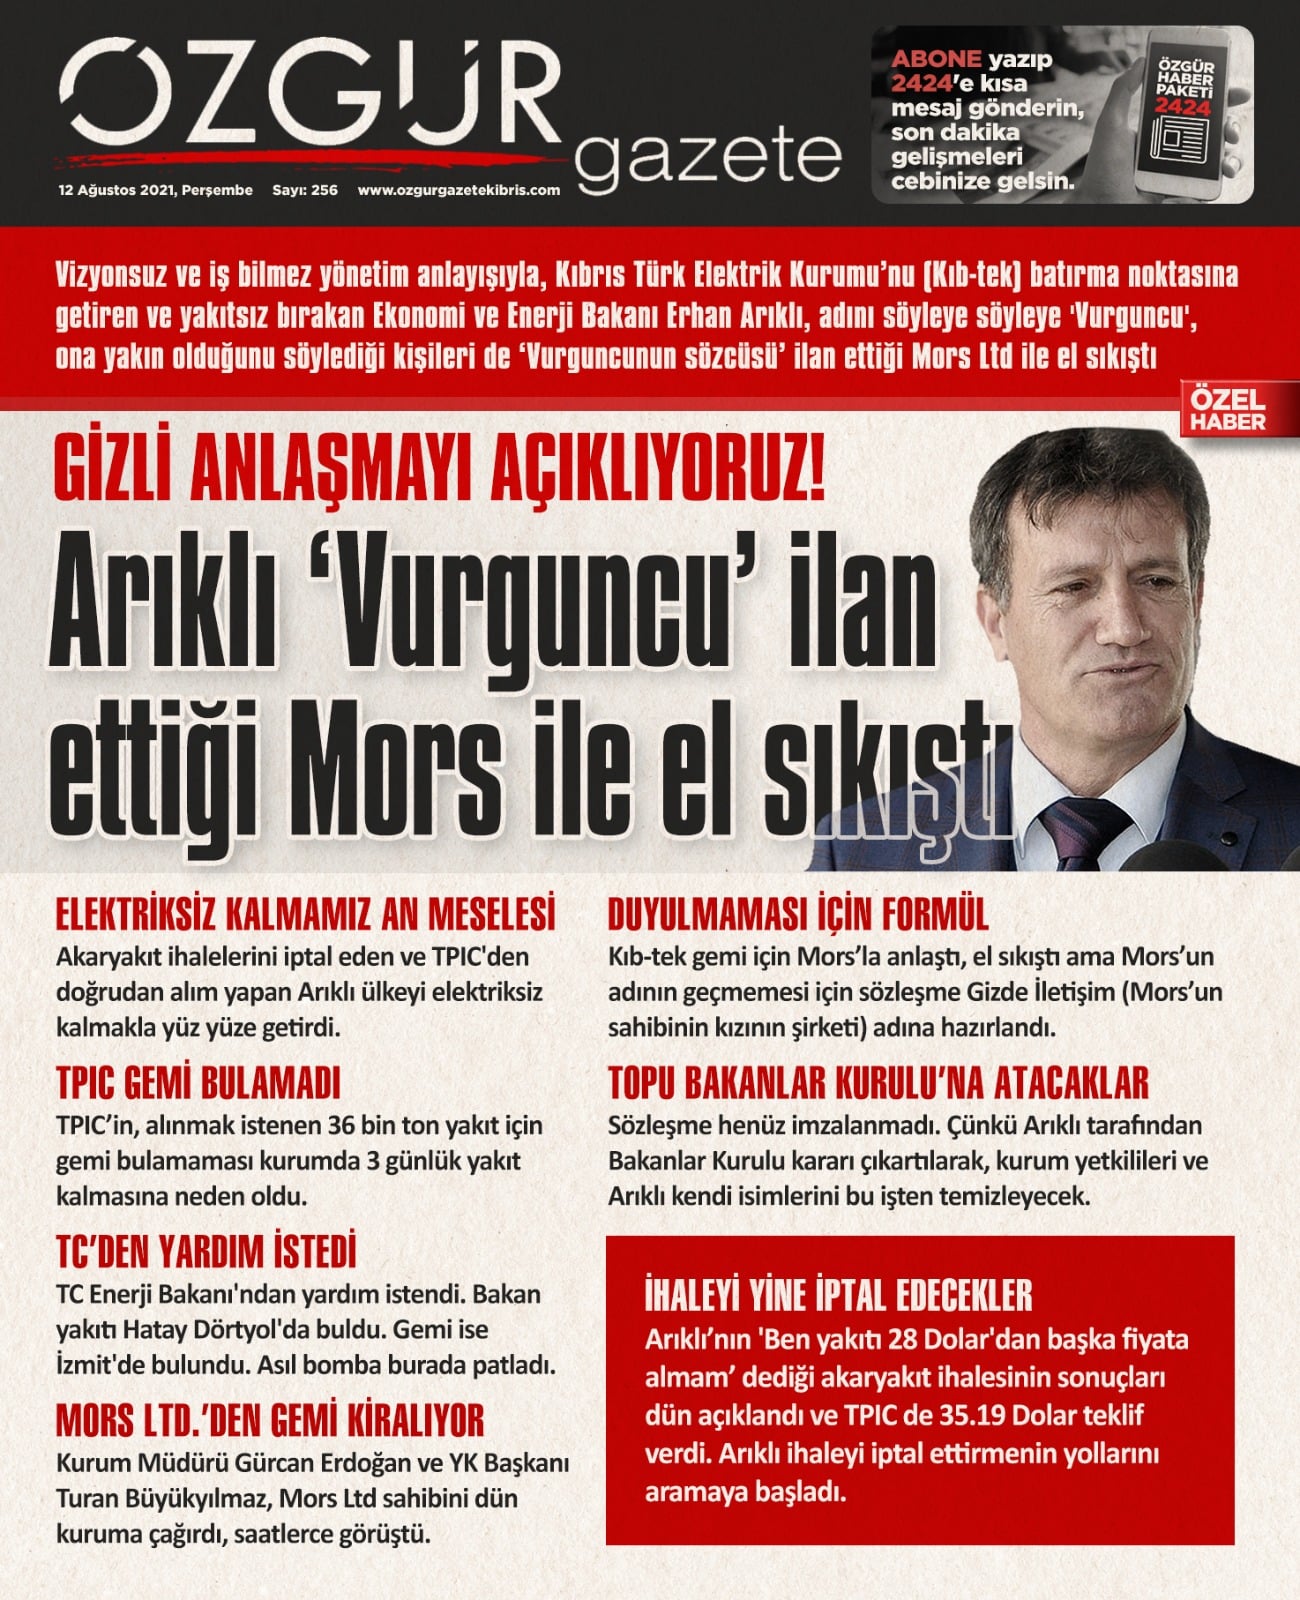 ozgur_gazete_kibris_kib_tek_arikli_mors